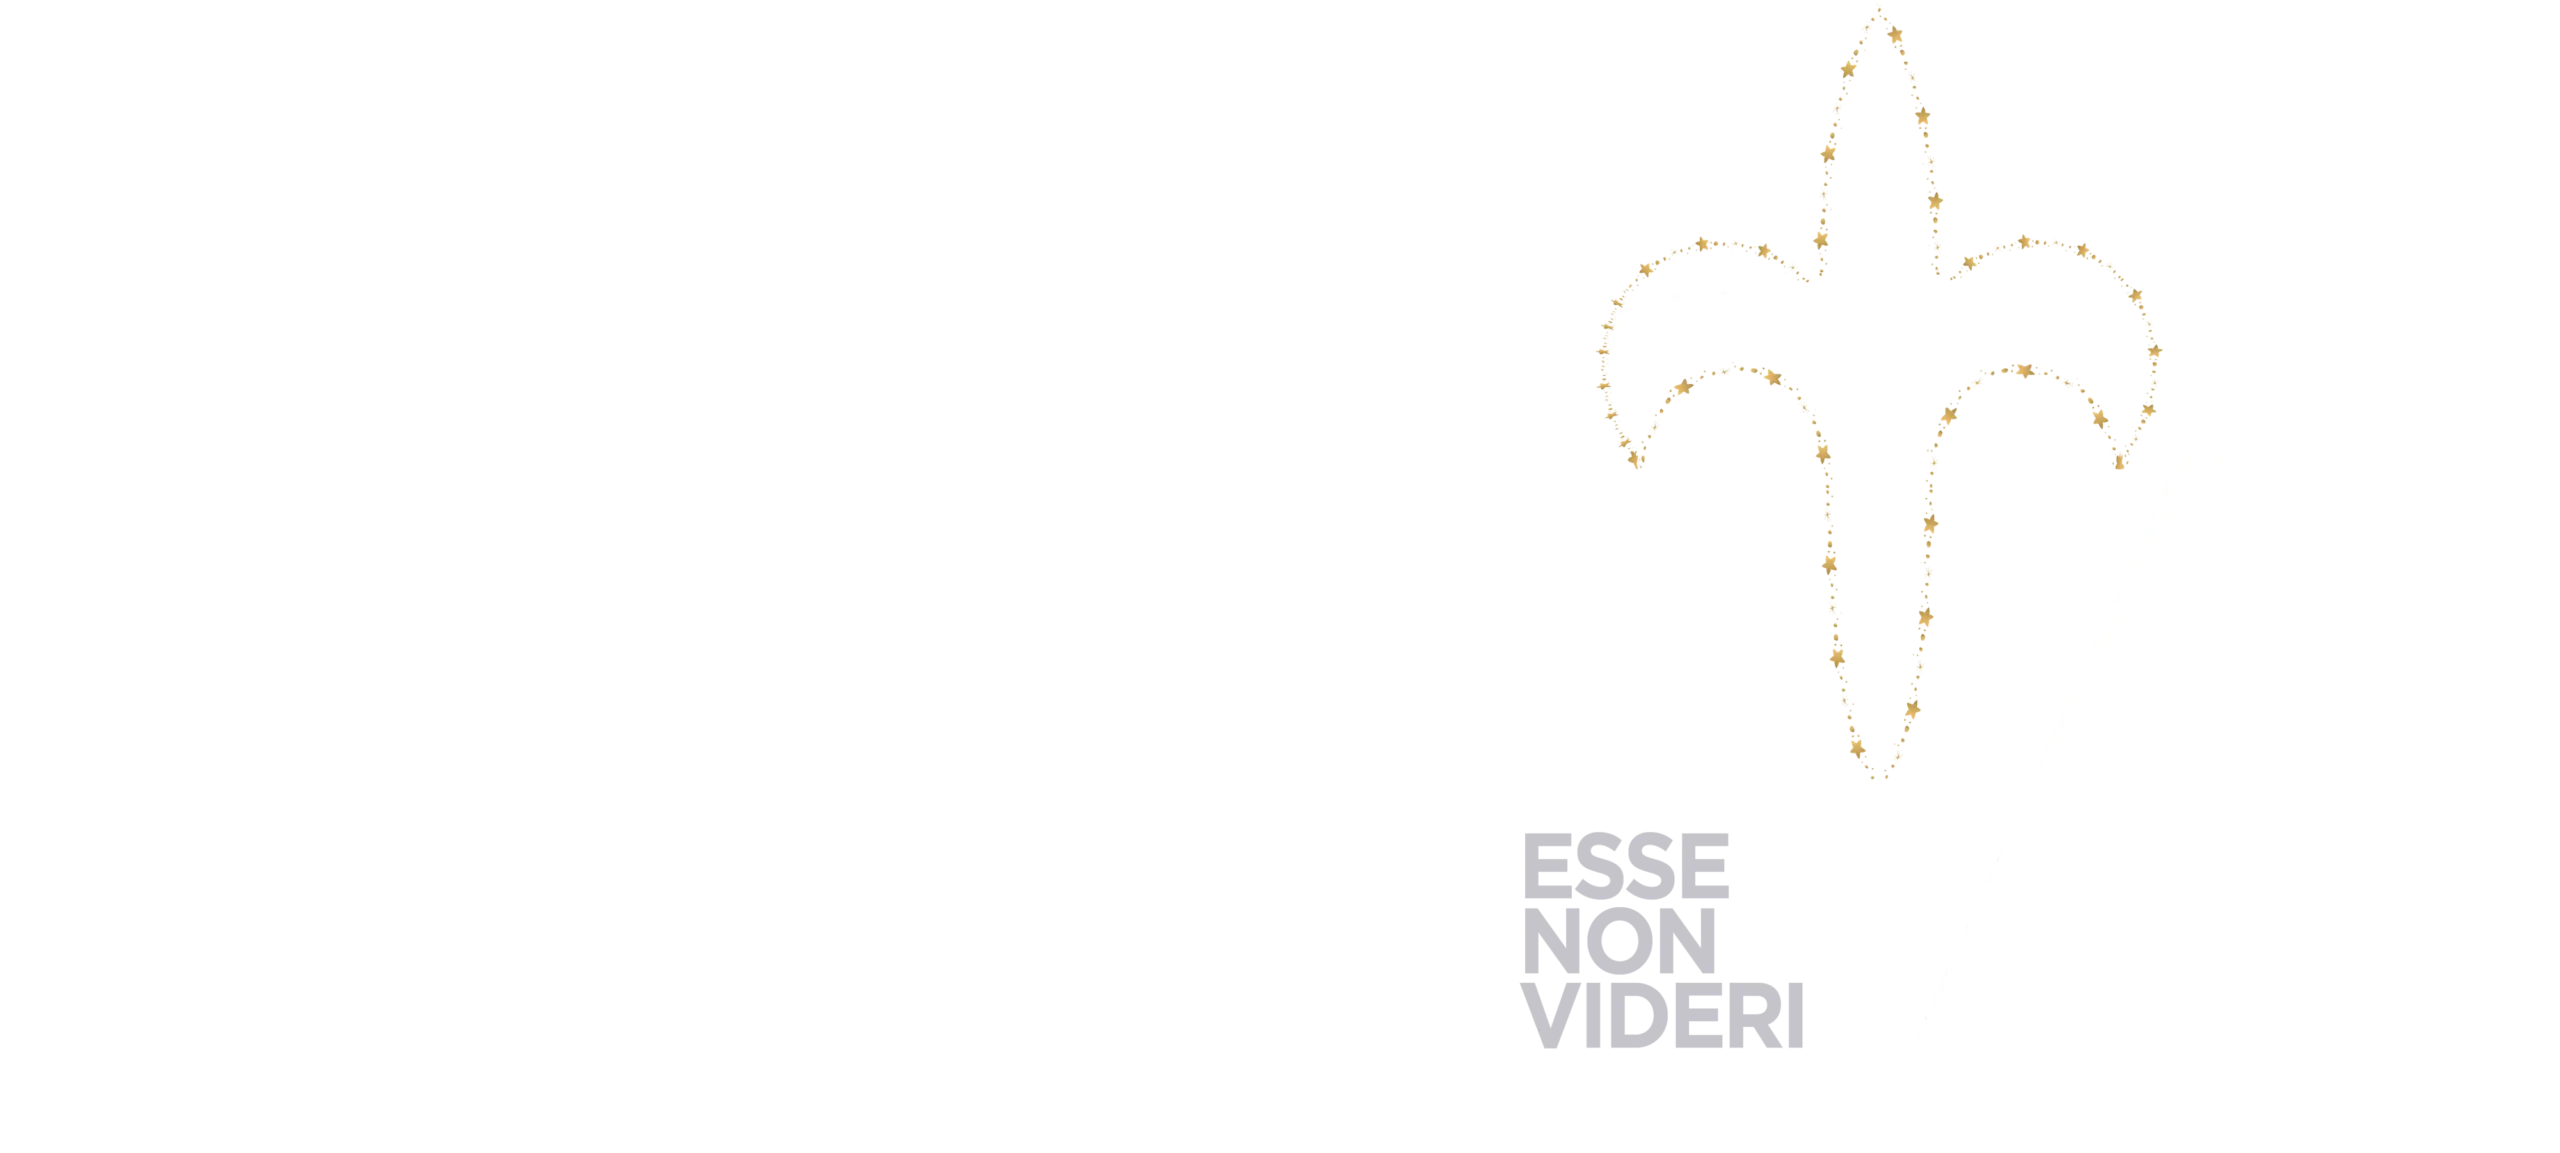 St. Joseph's University, New York’s Third Annual Gala